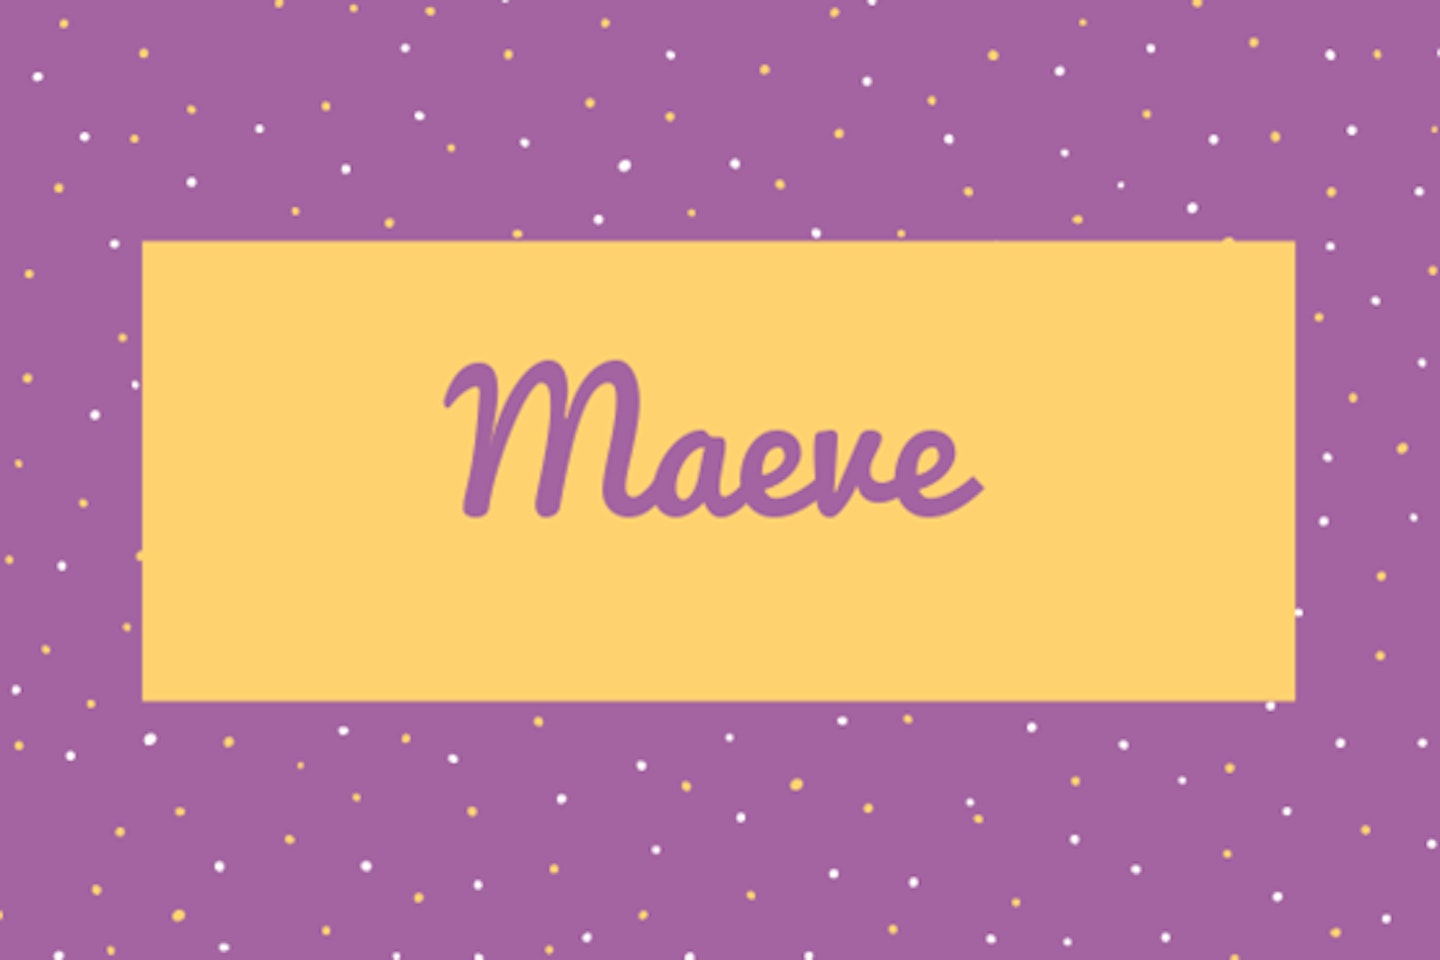 9) Maeve